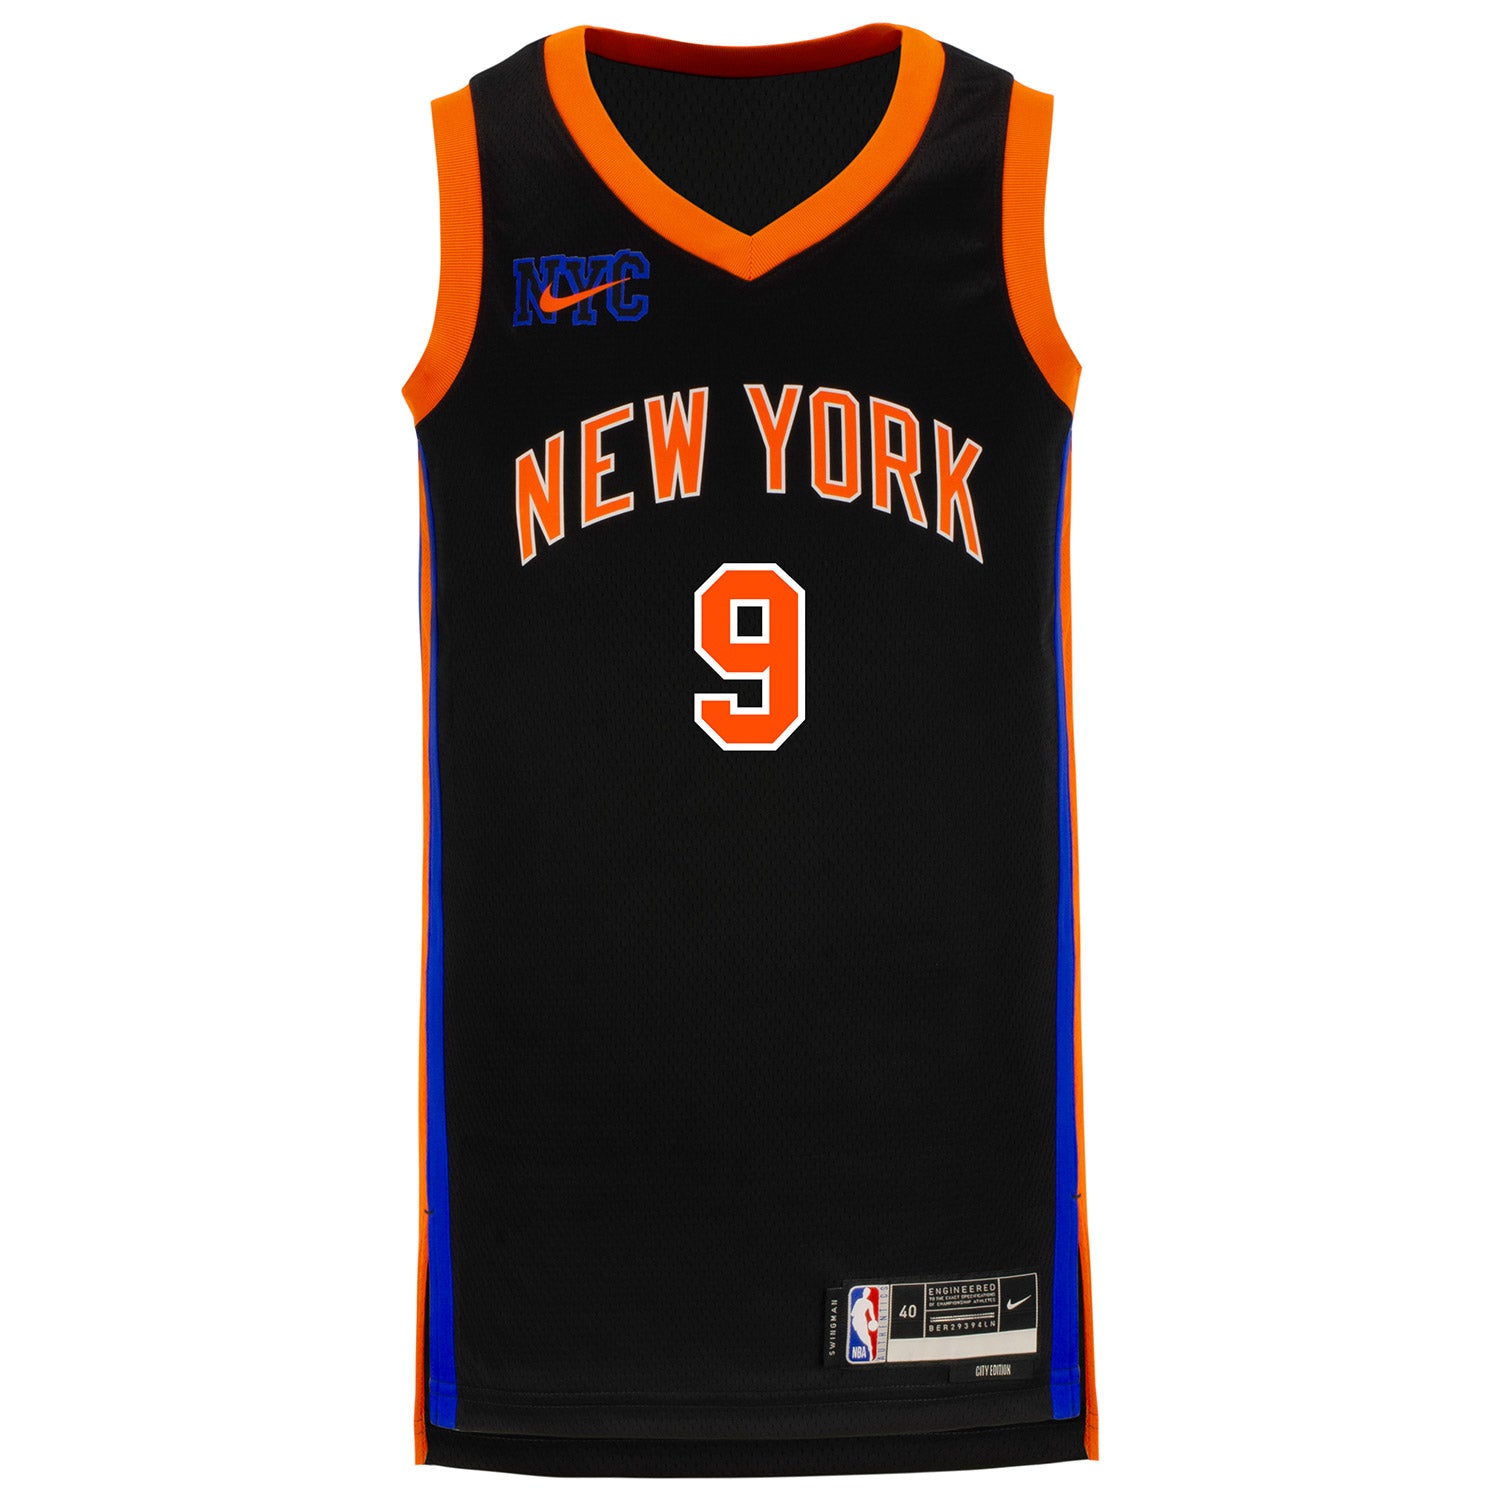 New York Knicks Nike City Edition Swingman Jersey 22 - Black - RJ